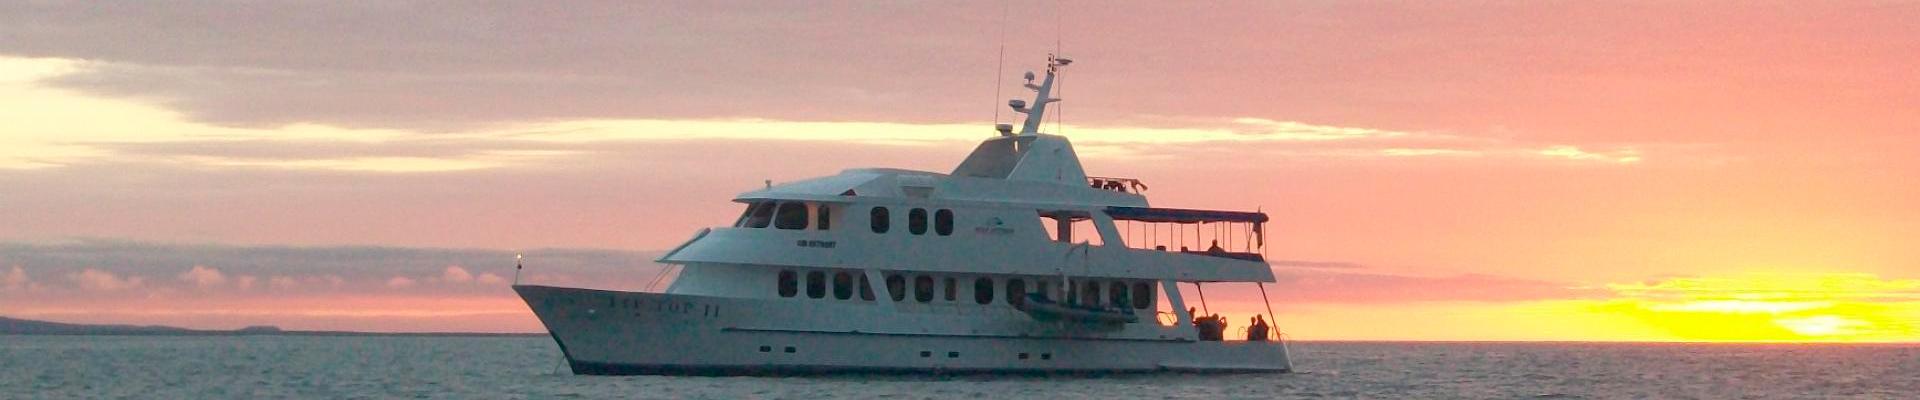 First Class Galapagos Island Cruise